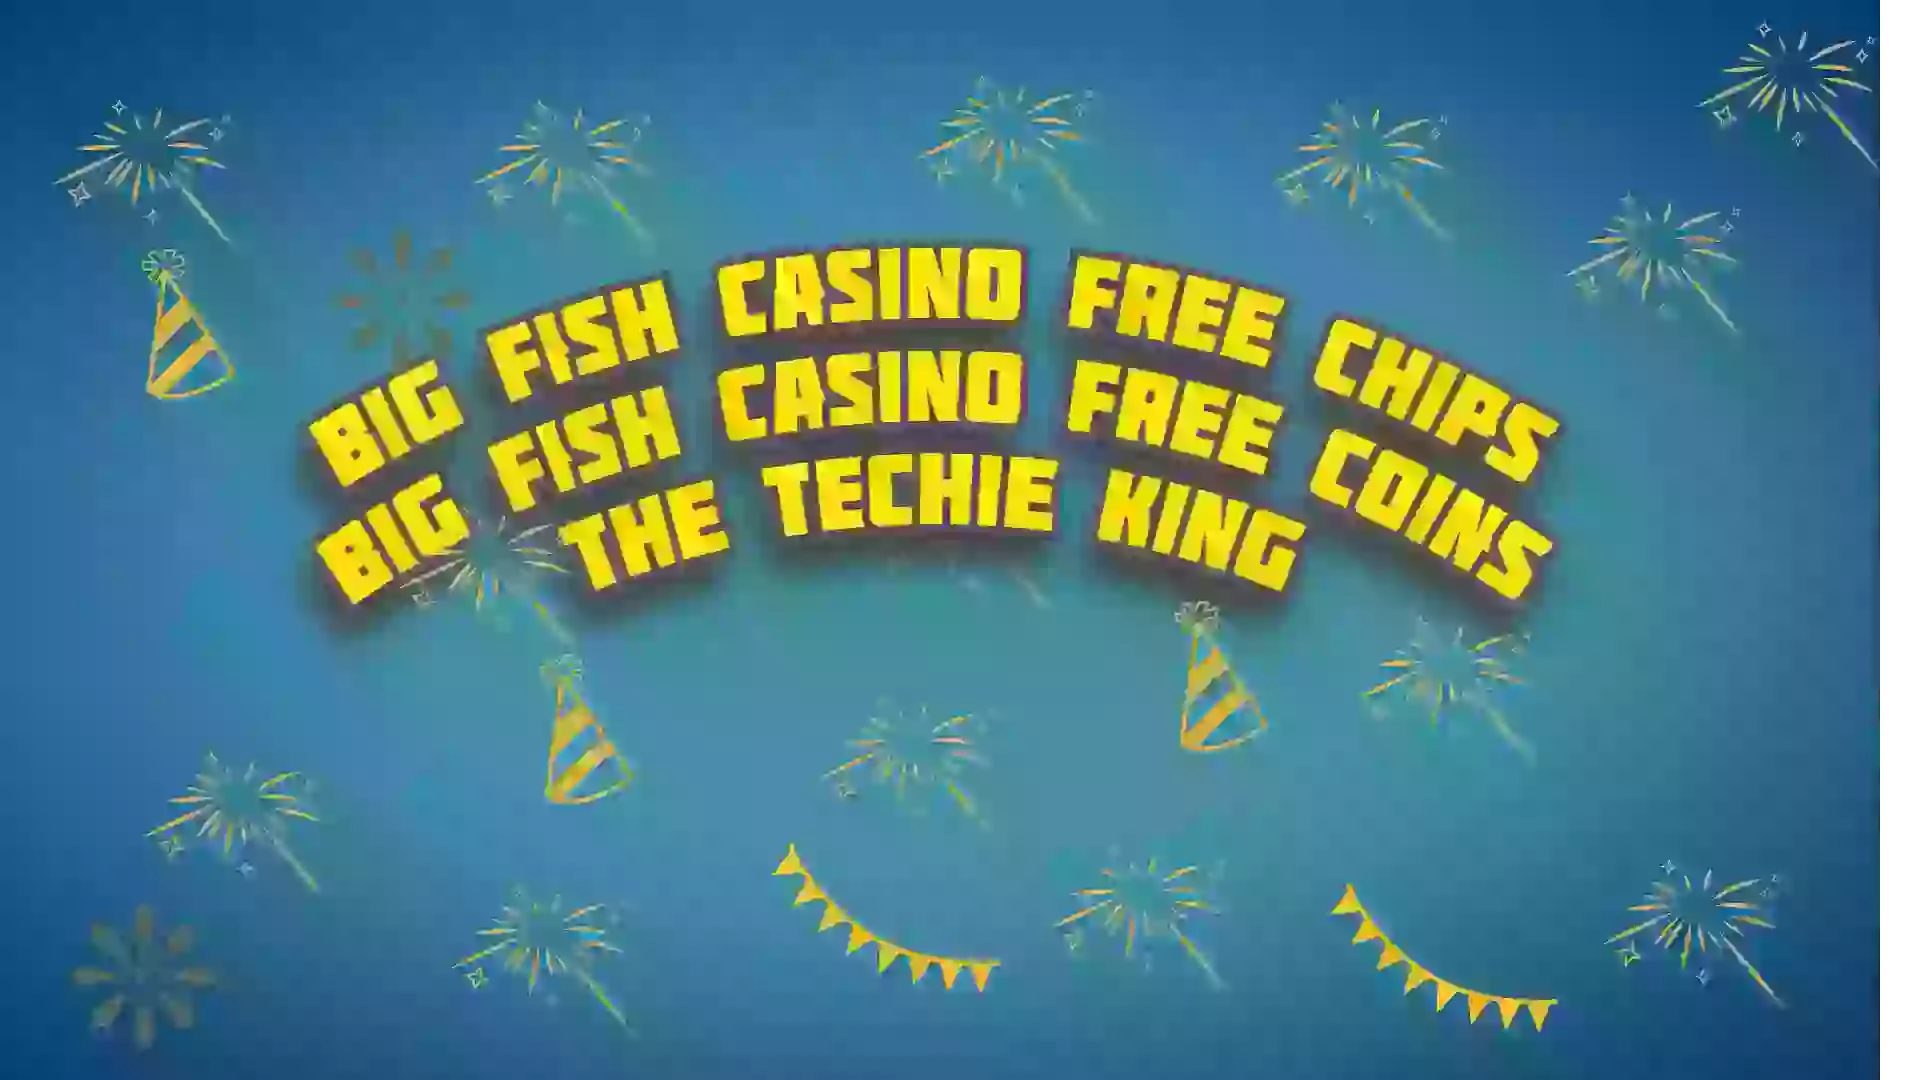 Big Fish Casino Free Chips 2022